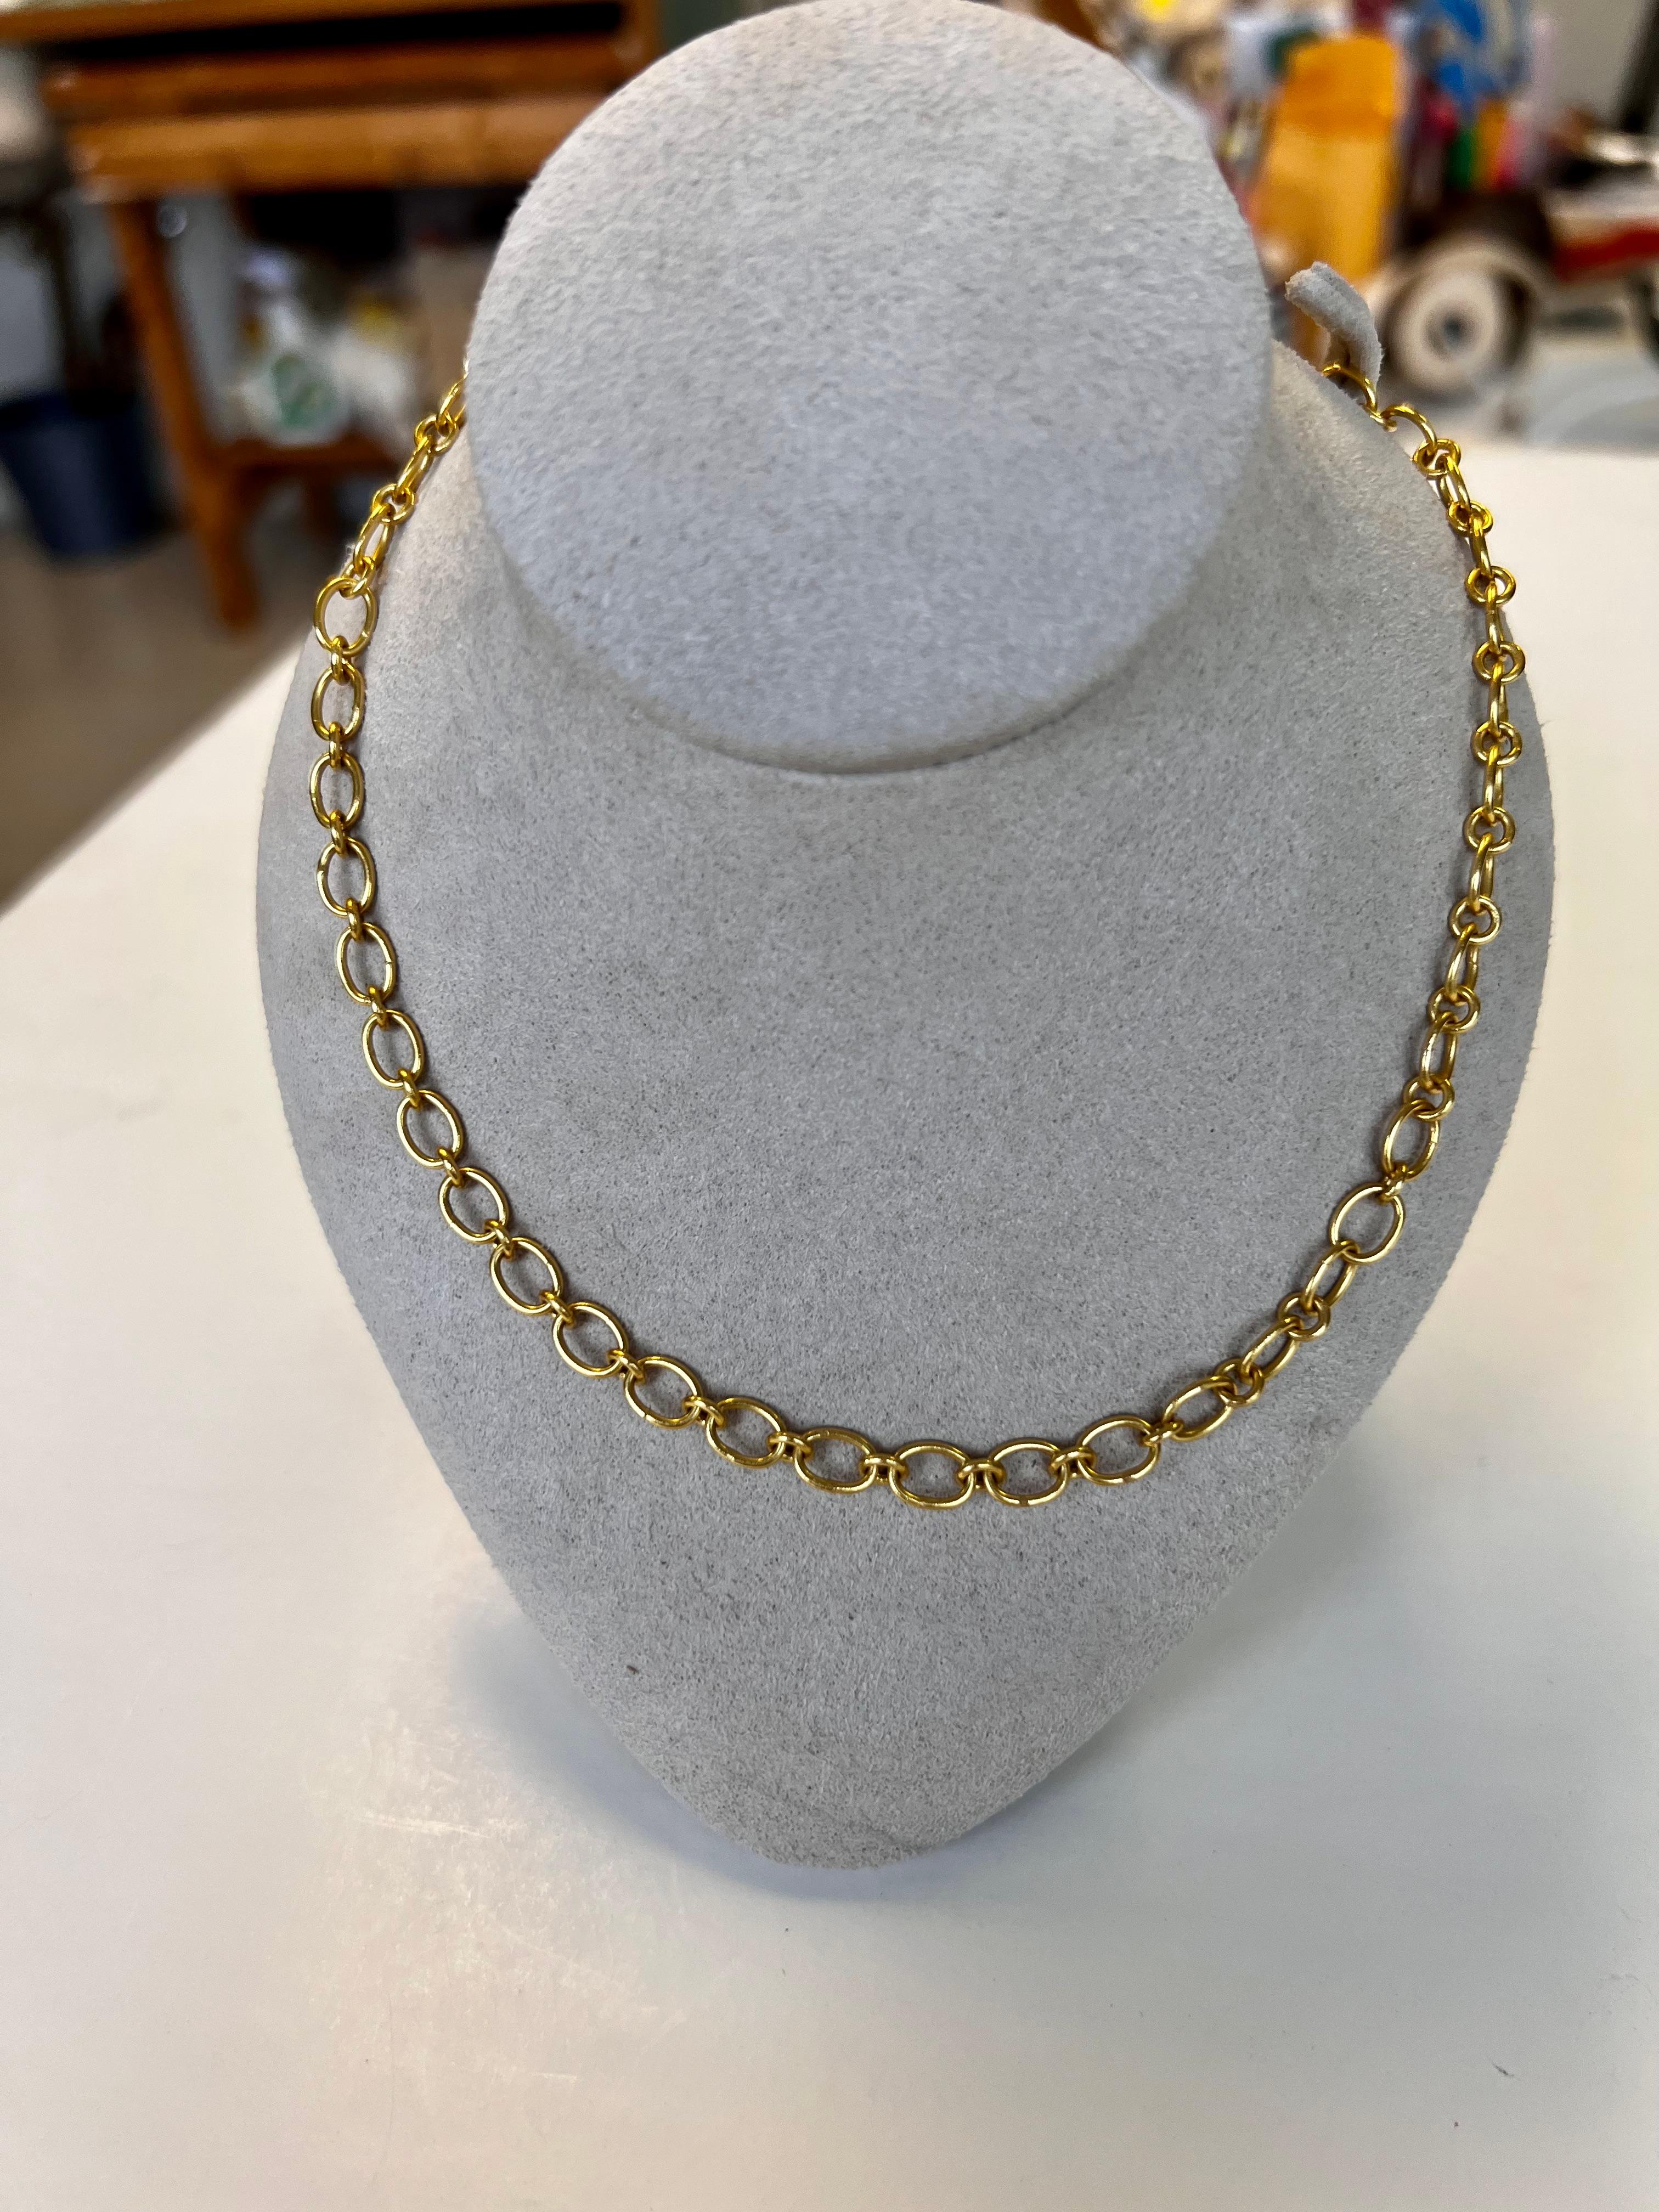 22 karat gold necklace